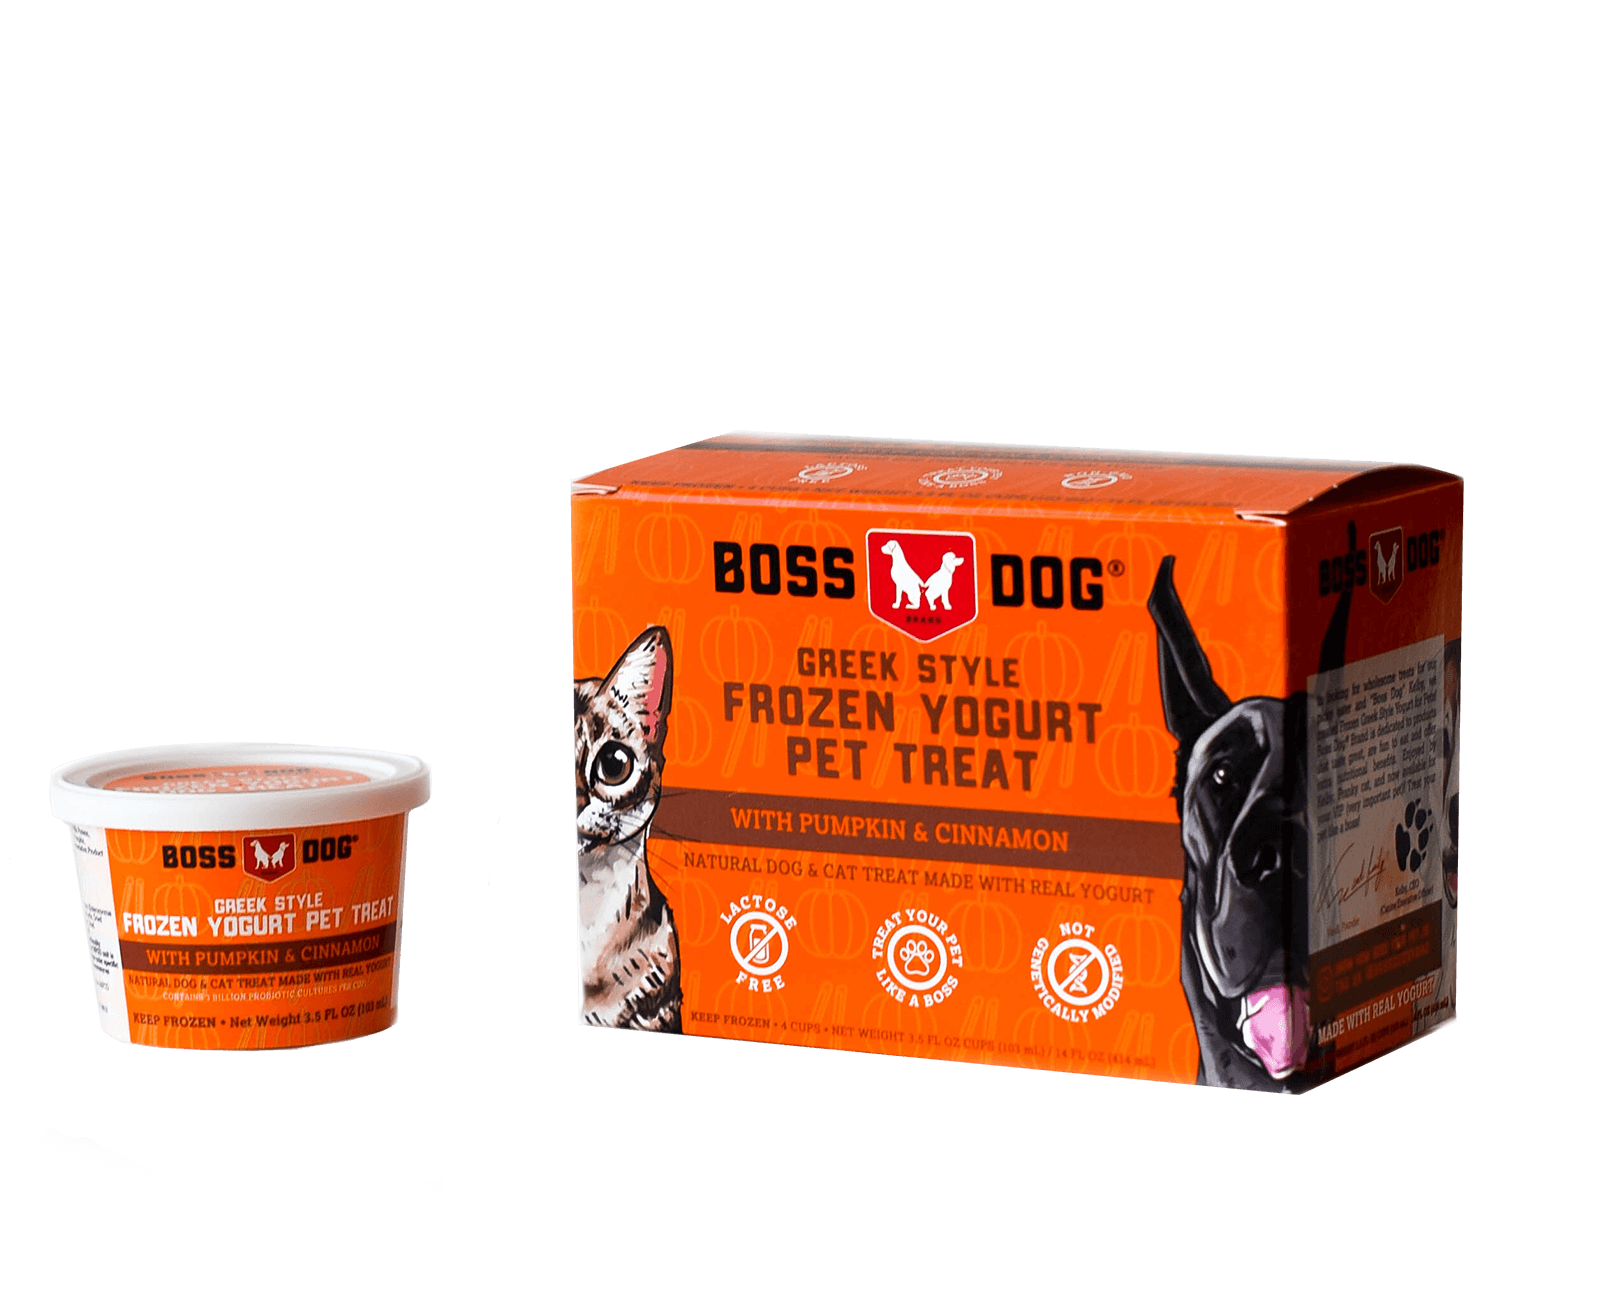 Boss Dog Greek Style Frozen Yogurt -  Pumpkin And Cinnamon Pet Treat